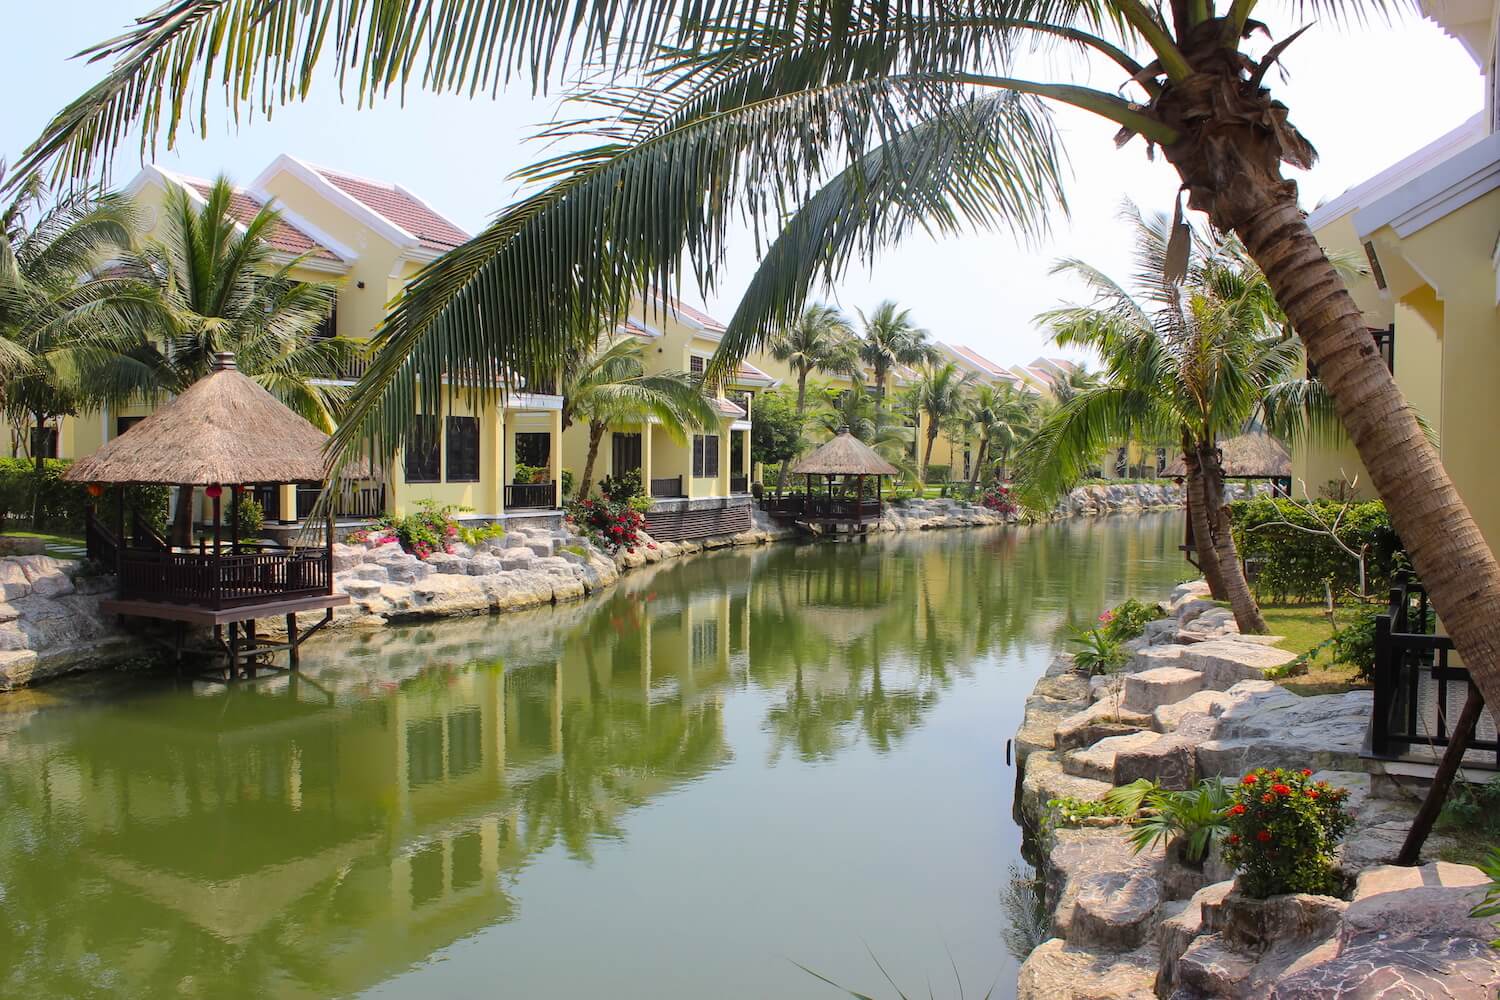 koi resort and spa lake and palm trees